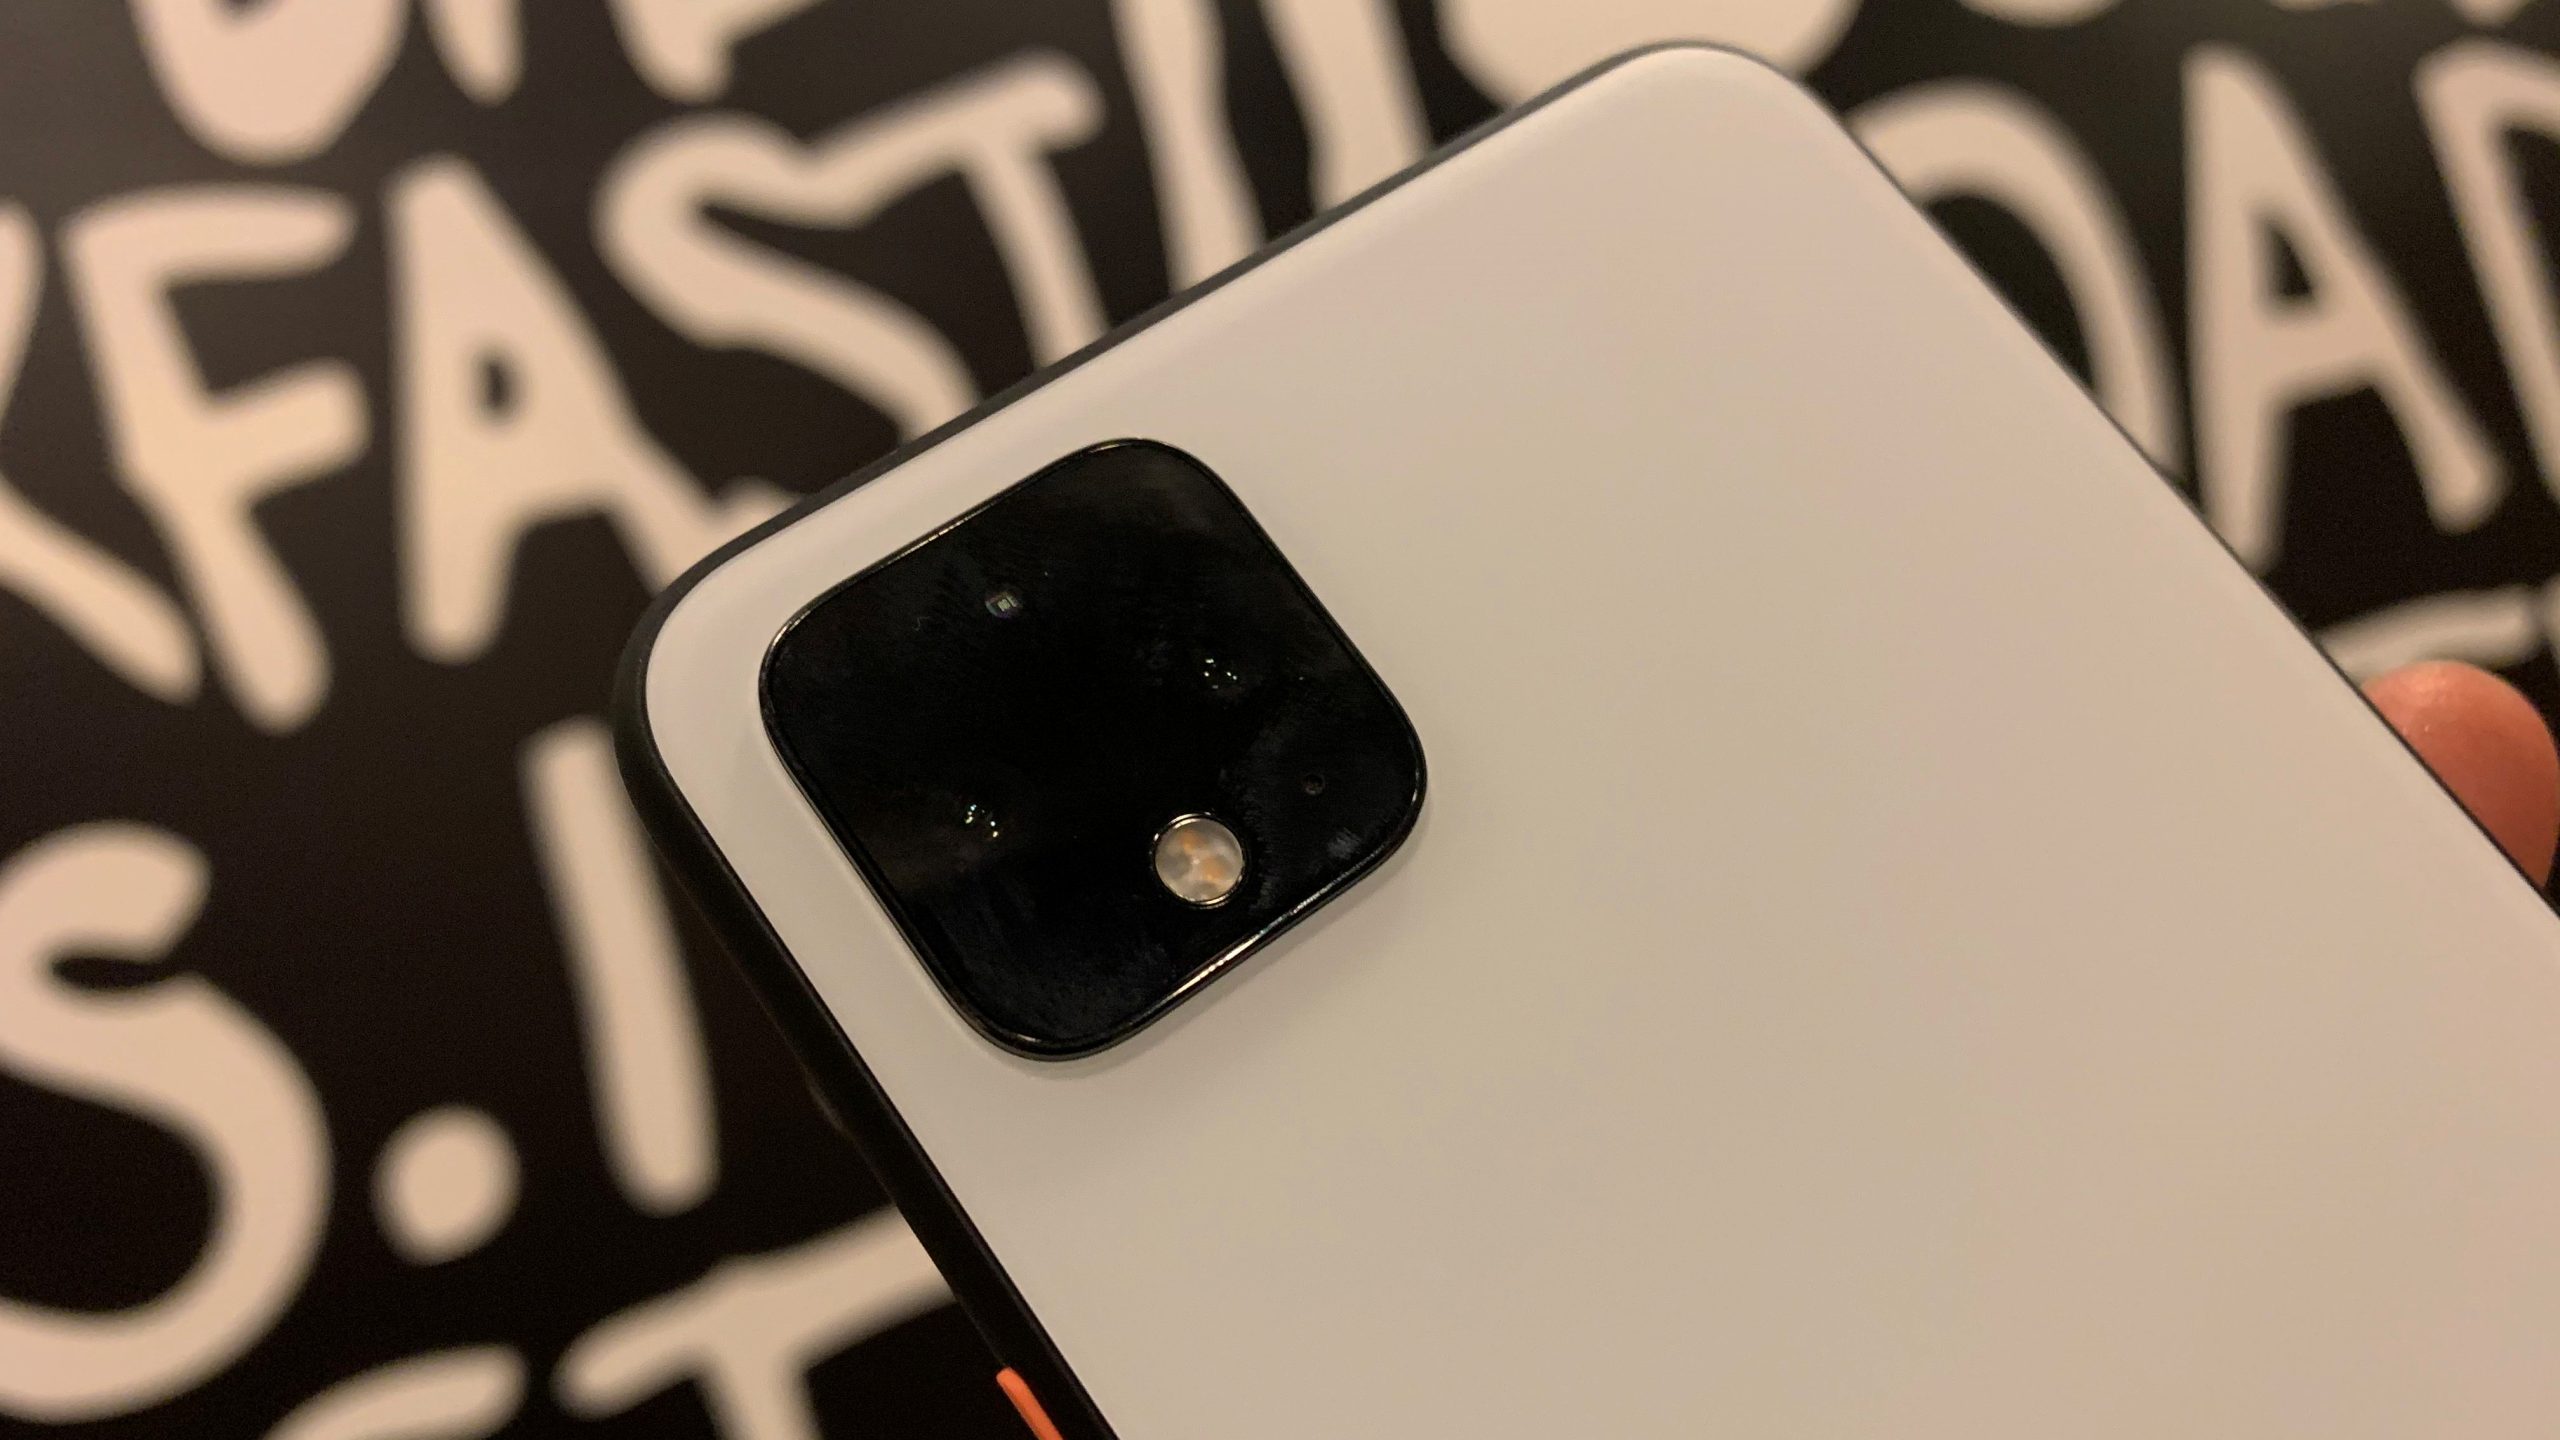 Pixel 4 Menghadapi Masalah ‘White Balance’ Pada Kamera Yang Memberikan Hasil Yang Sangat Teruk